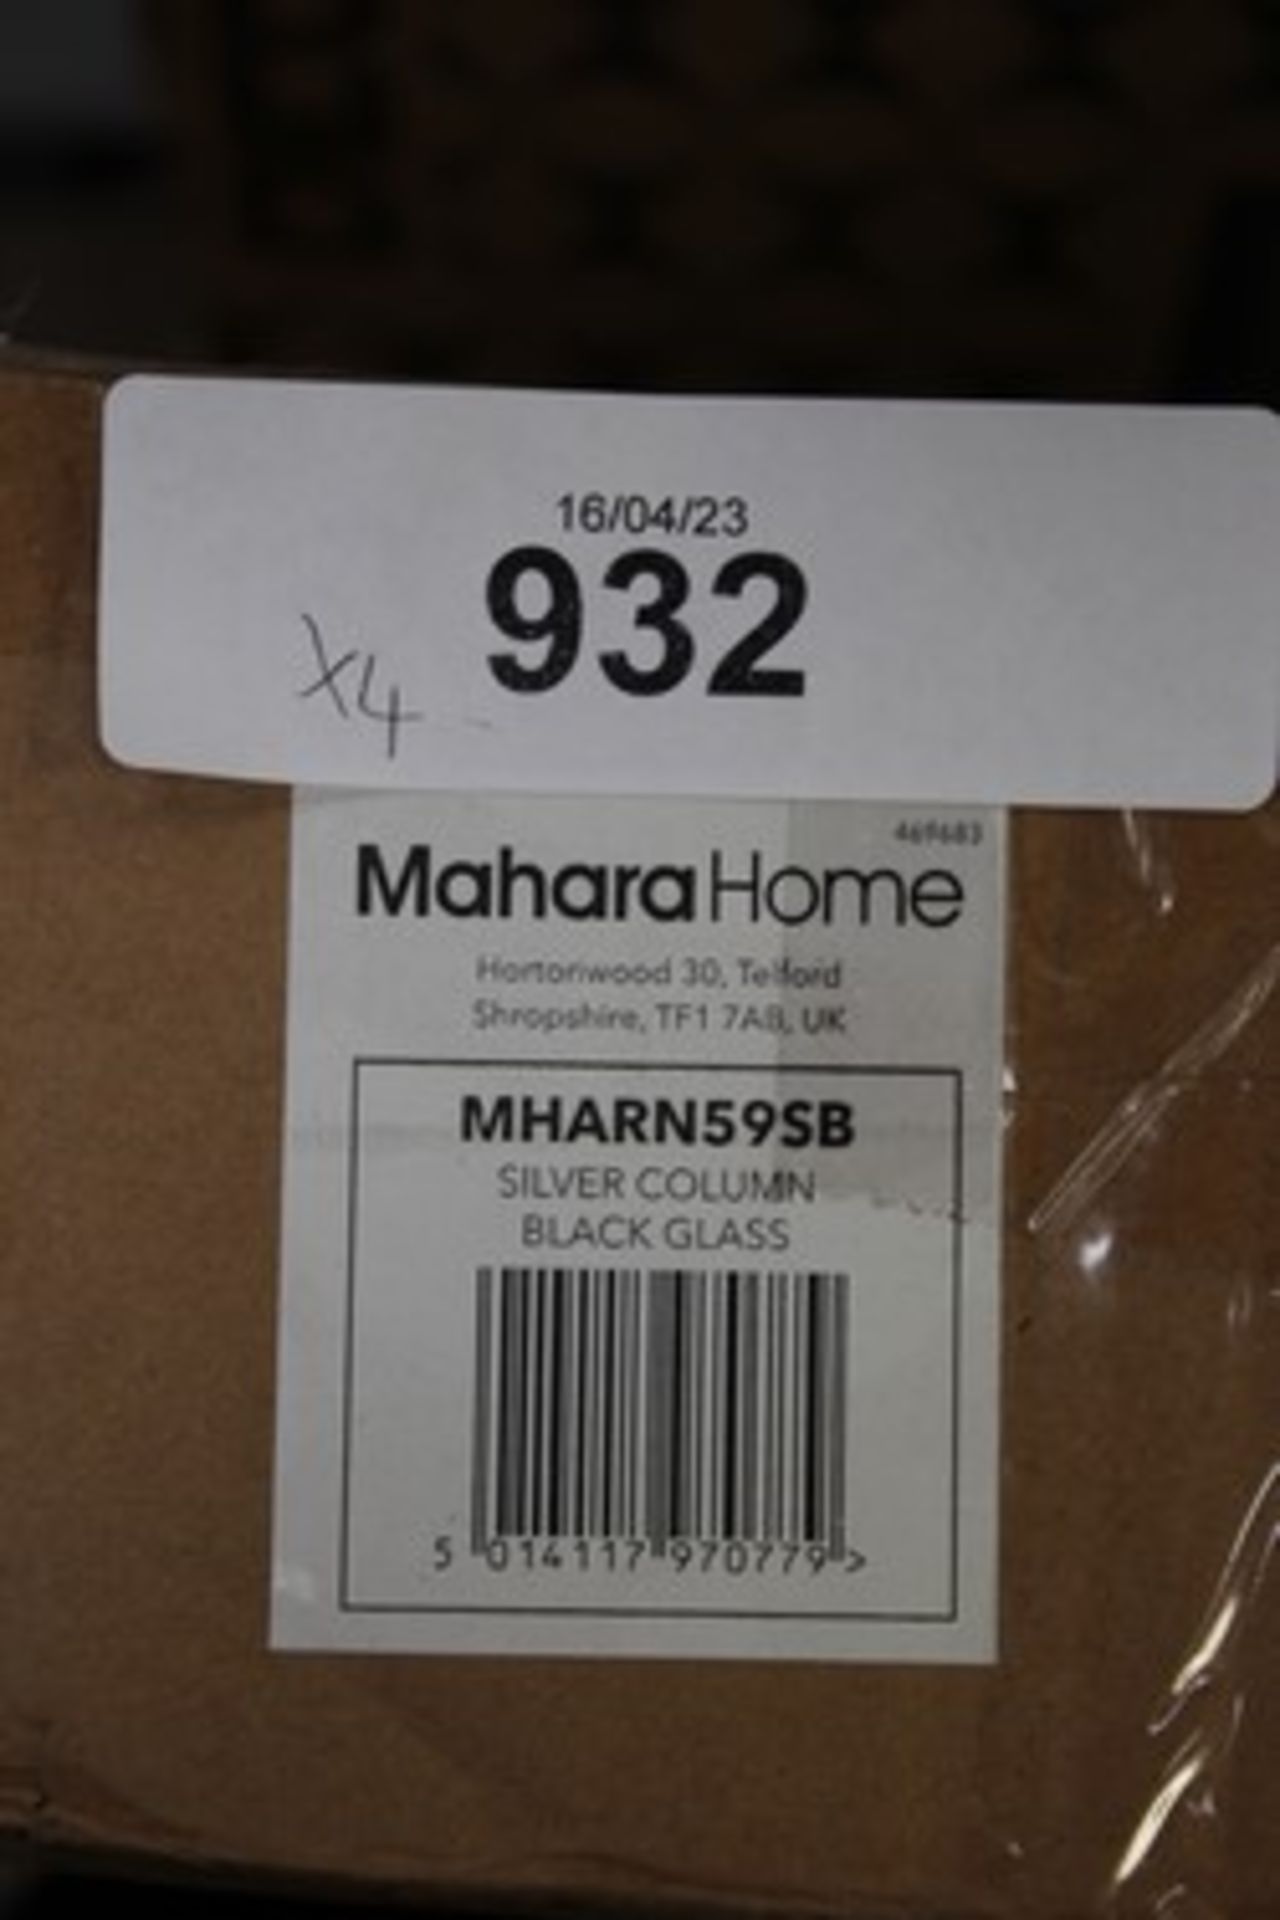 4 x TV units/cabinets including Mahara home item code: MHARN59SB and 1 x Decorotika North TV unit - Image 4 of 4